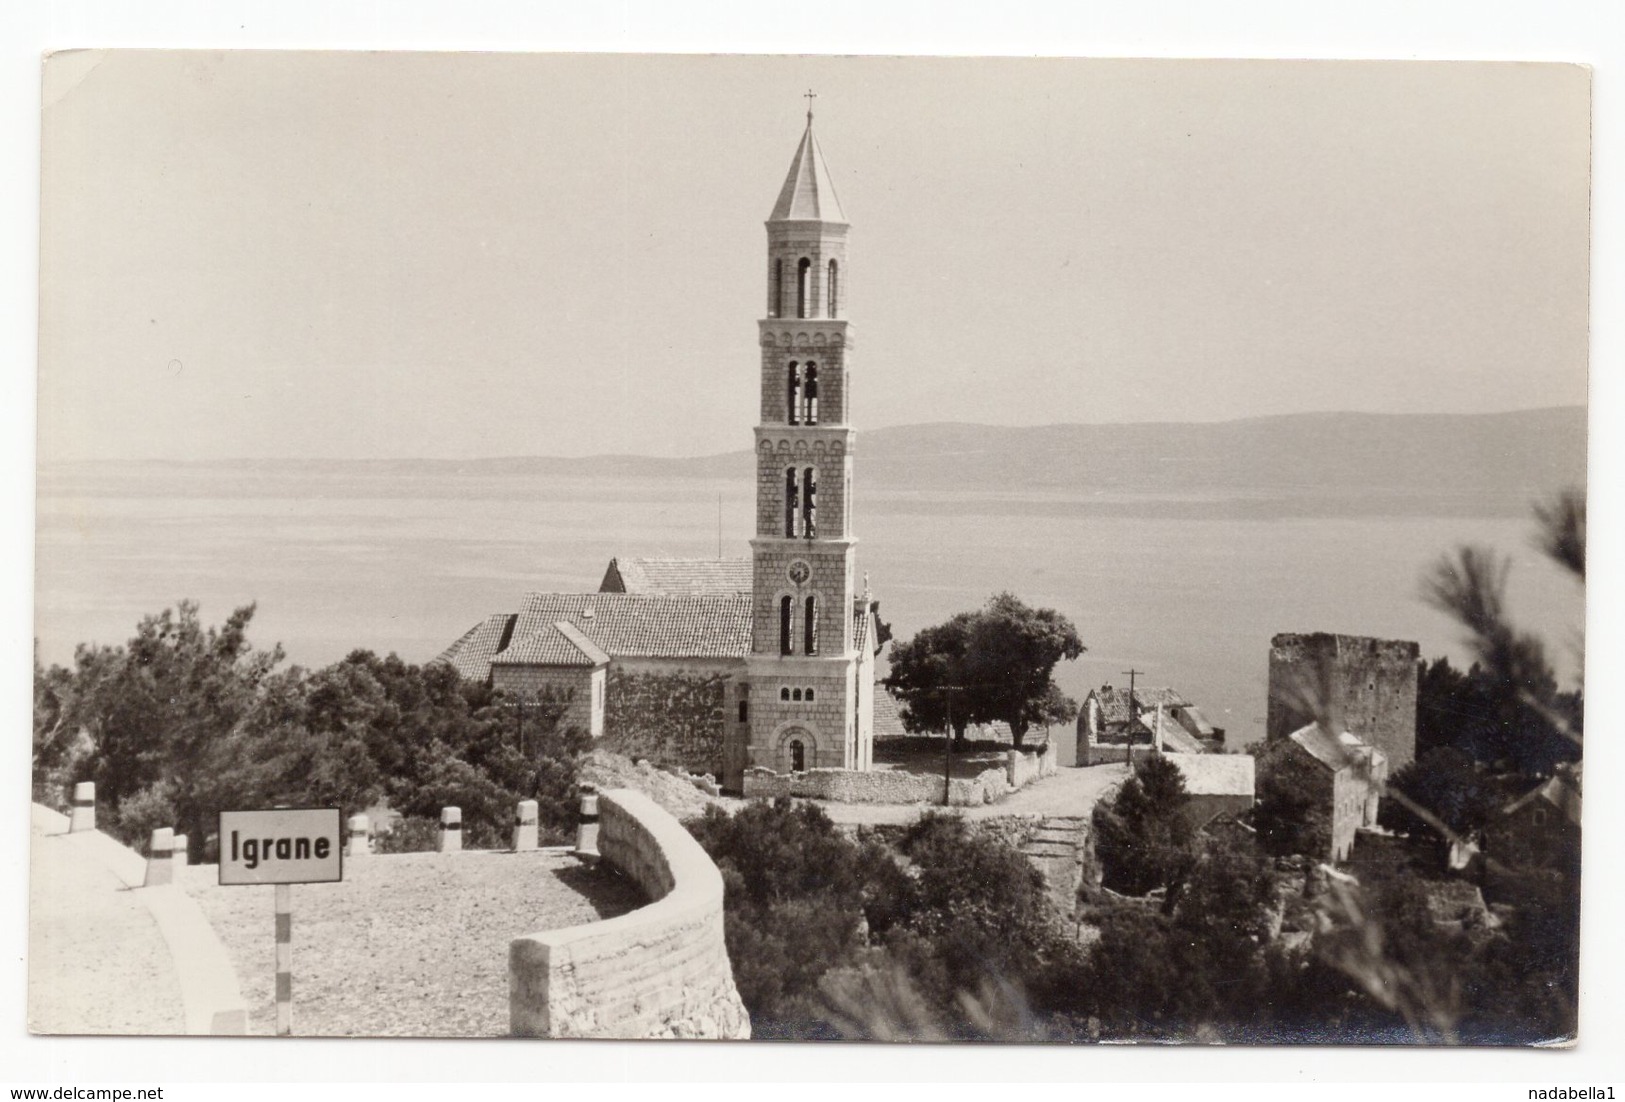 1950 YUGOSLAVIA, CROATIA, IGRANE, CHURCH, USED, ILLUSTRATED POSTCARD - Yugoslavia